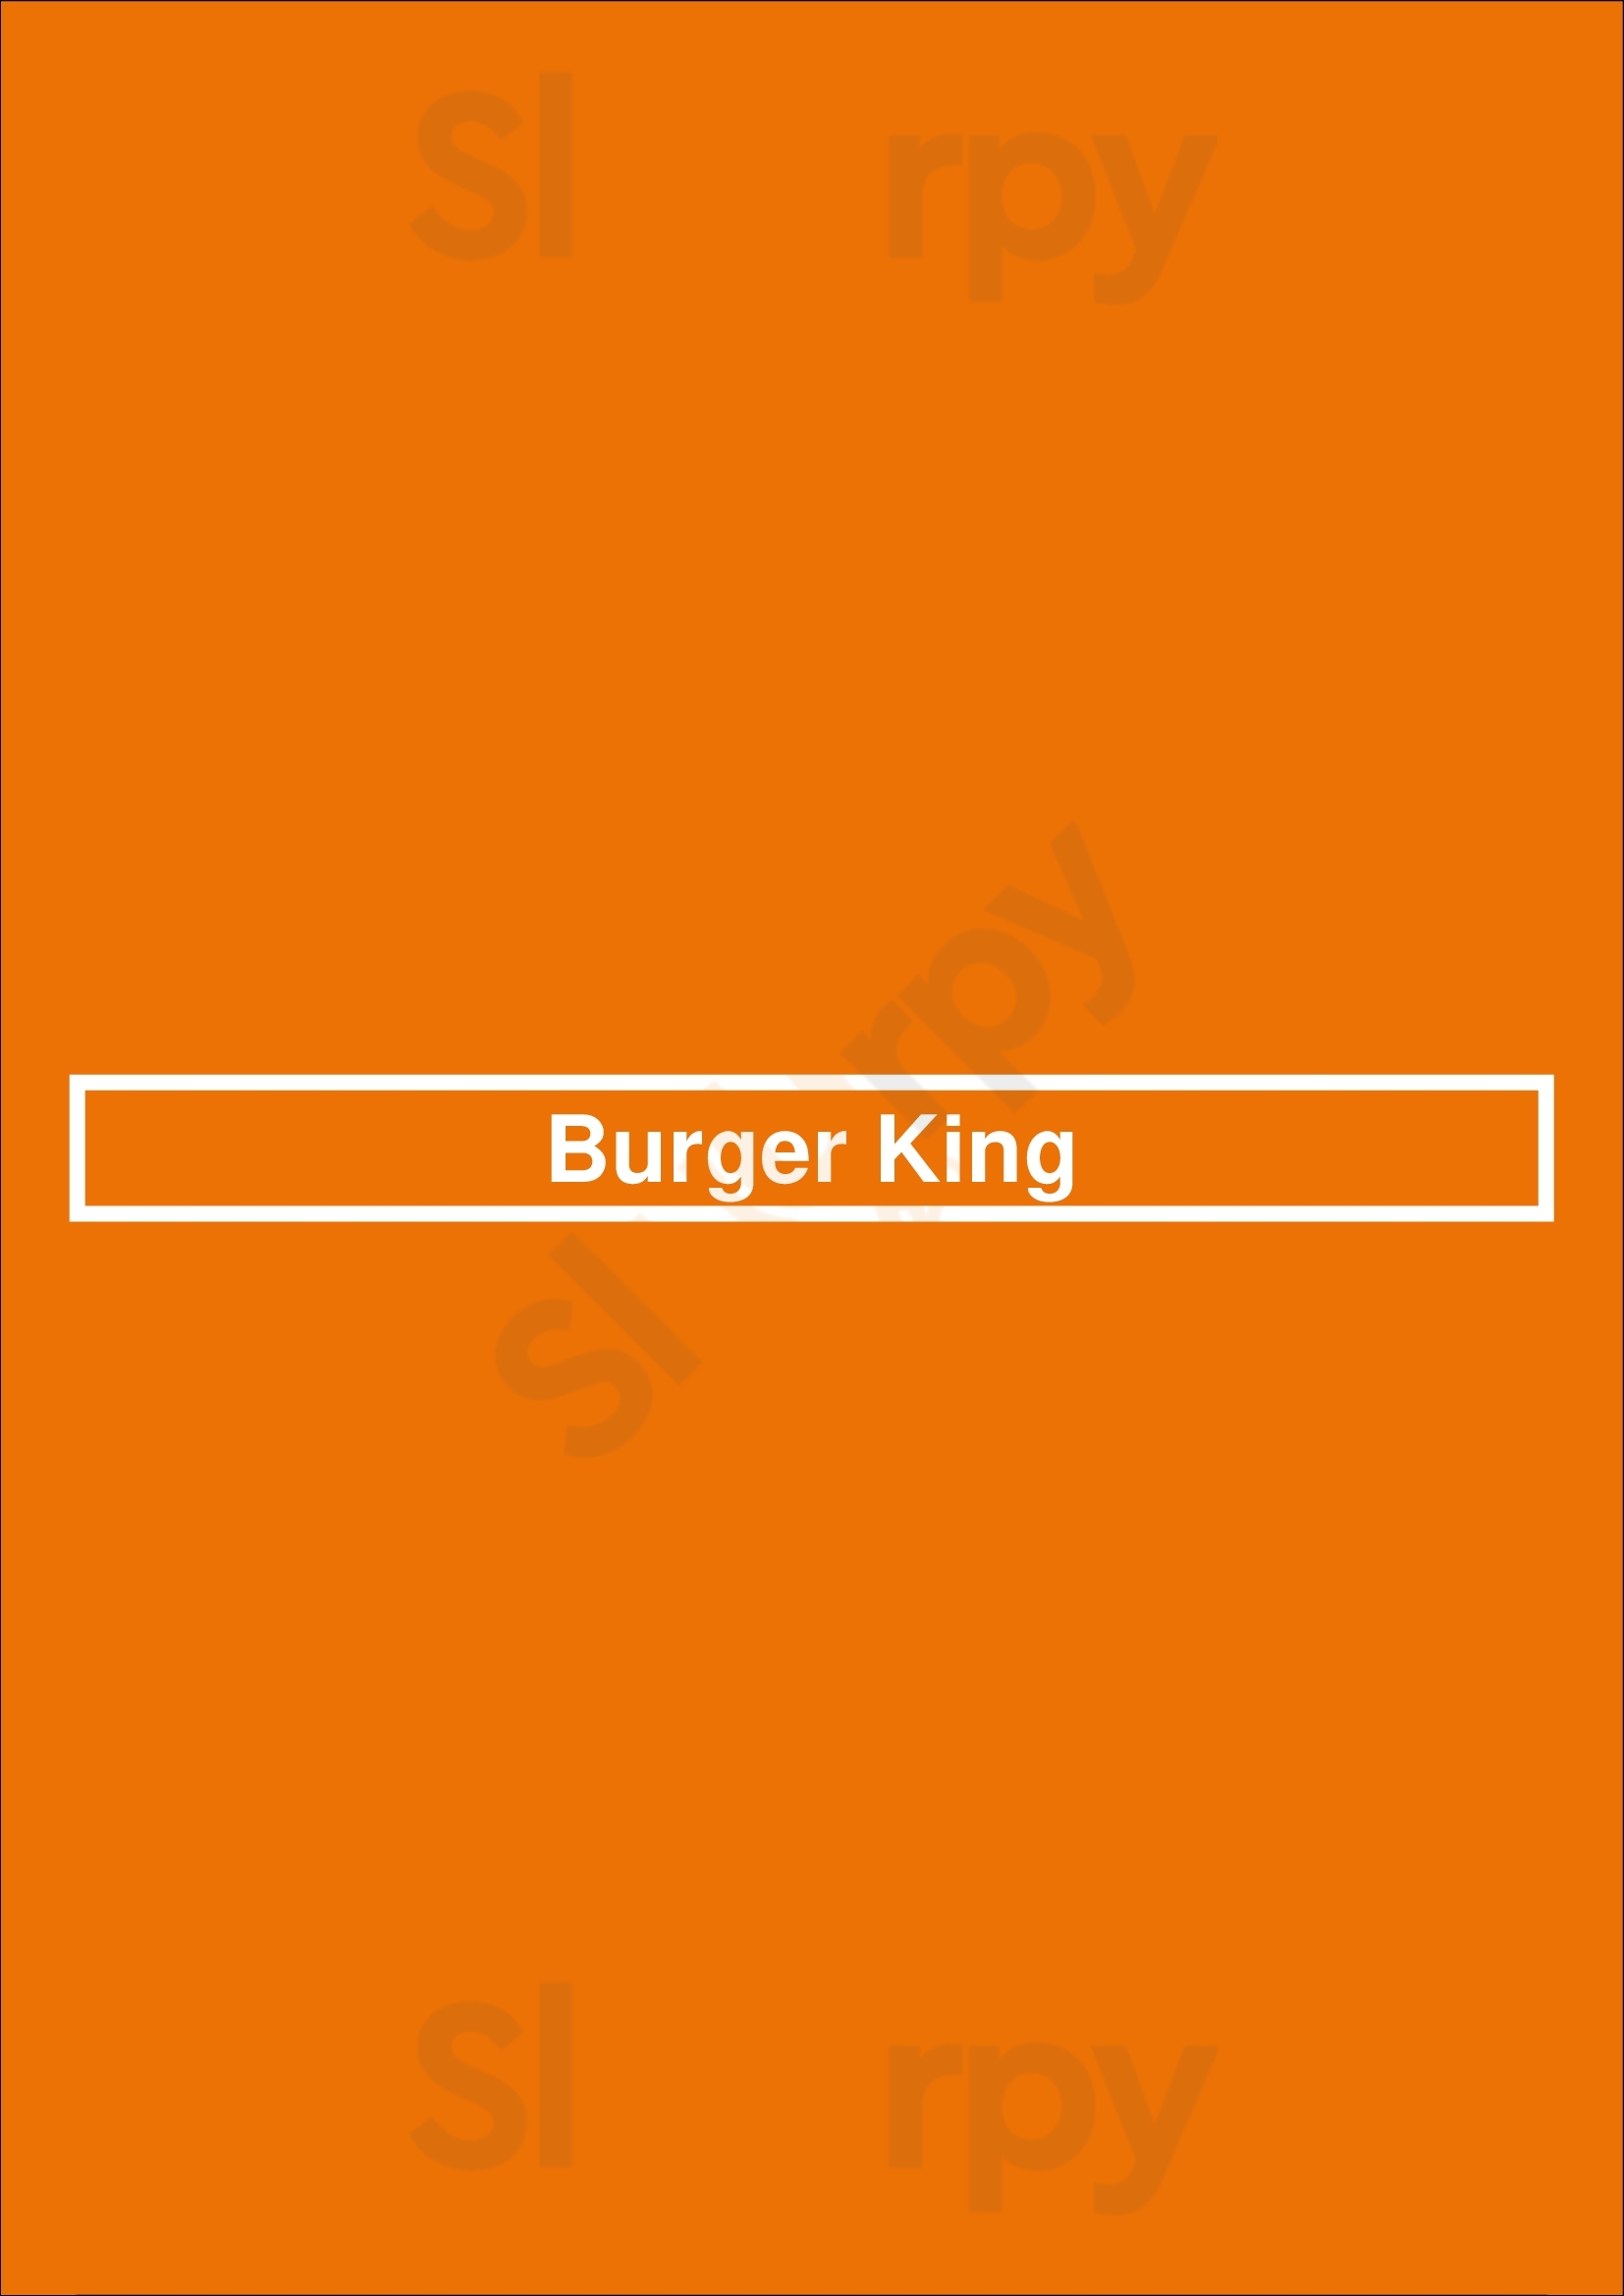 Burger King Savannah Menu - 1